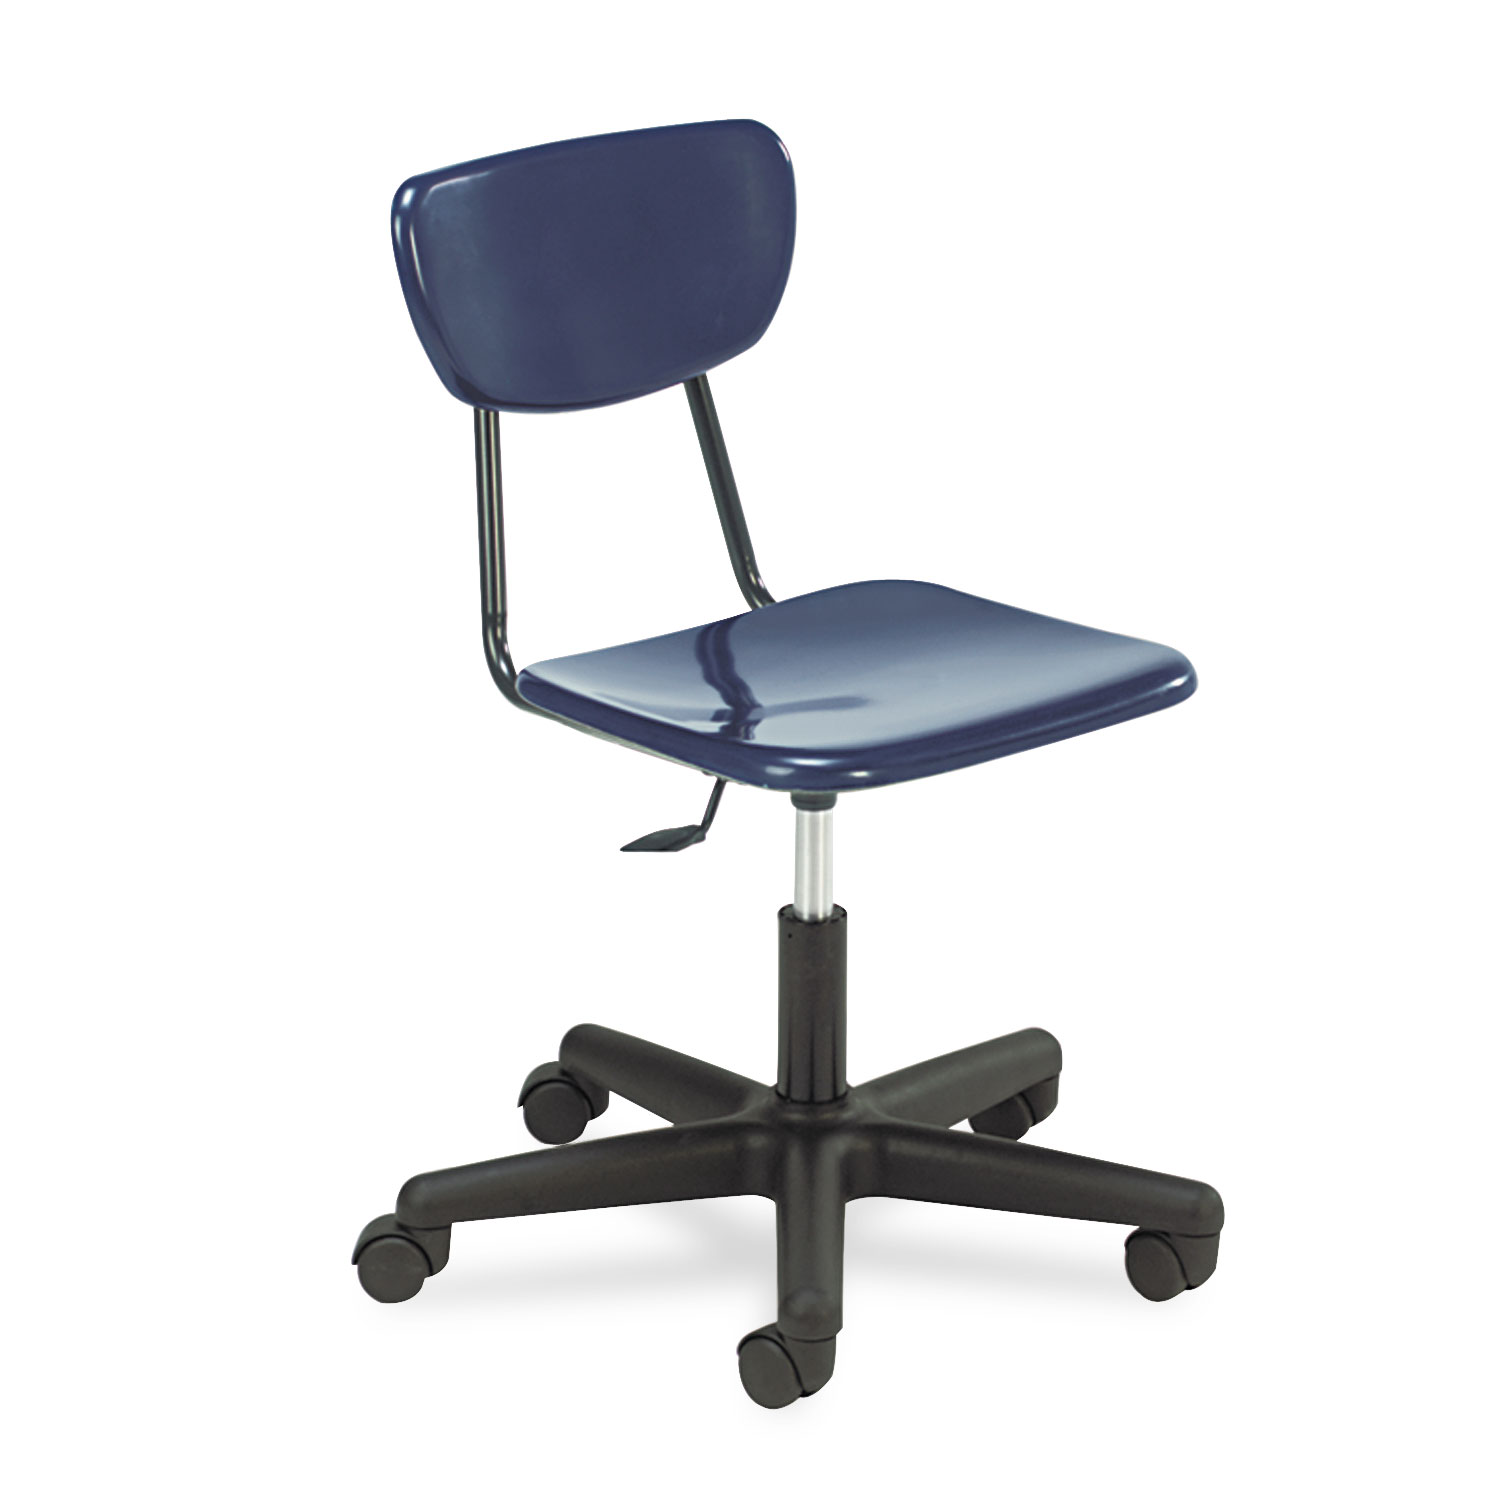 Adjustable-Height Teachers Chair, 27-3/432-7/8, Navy